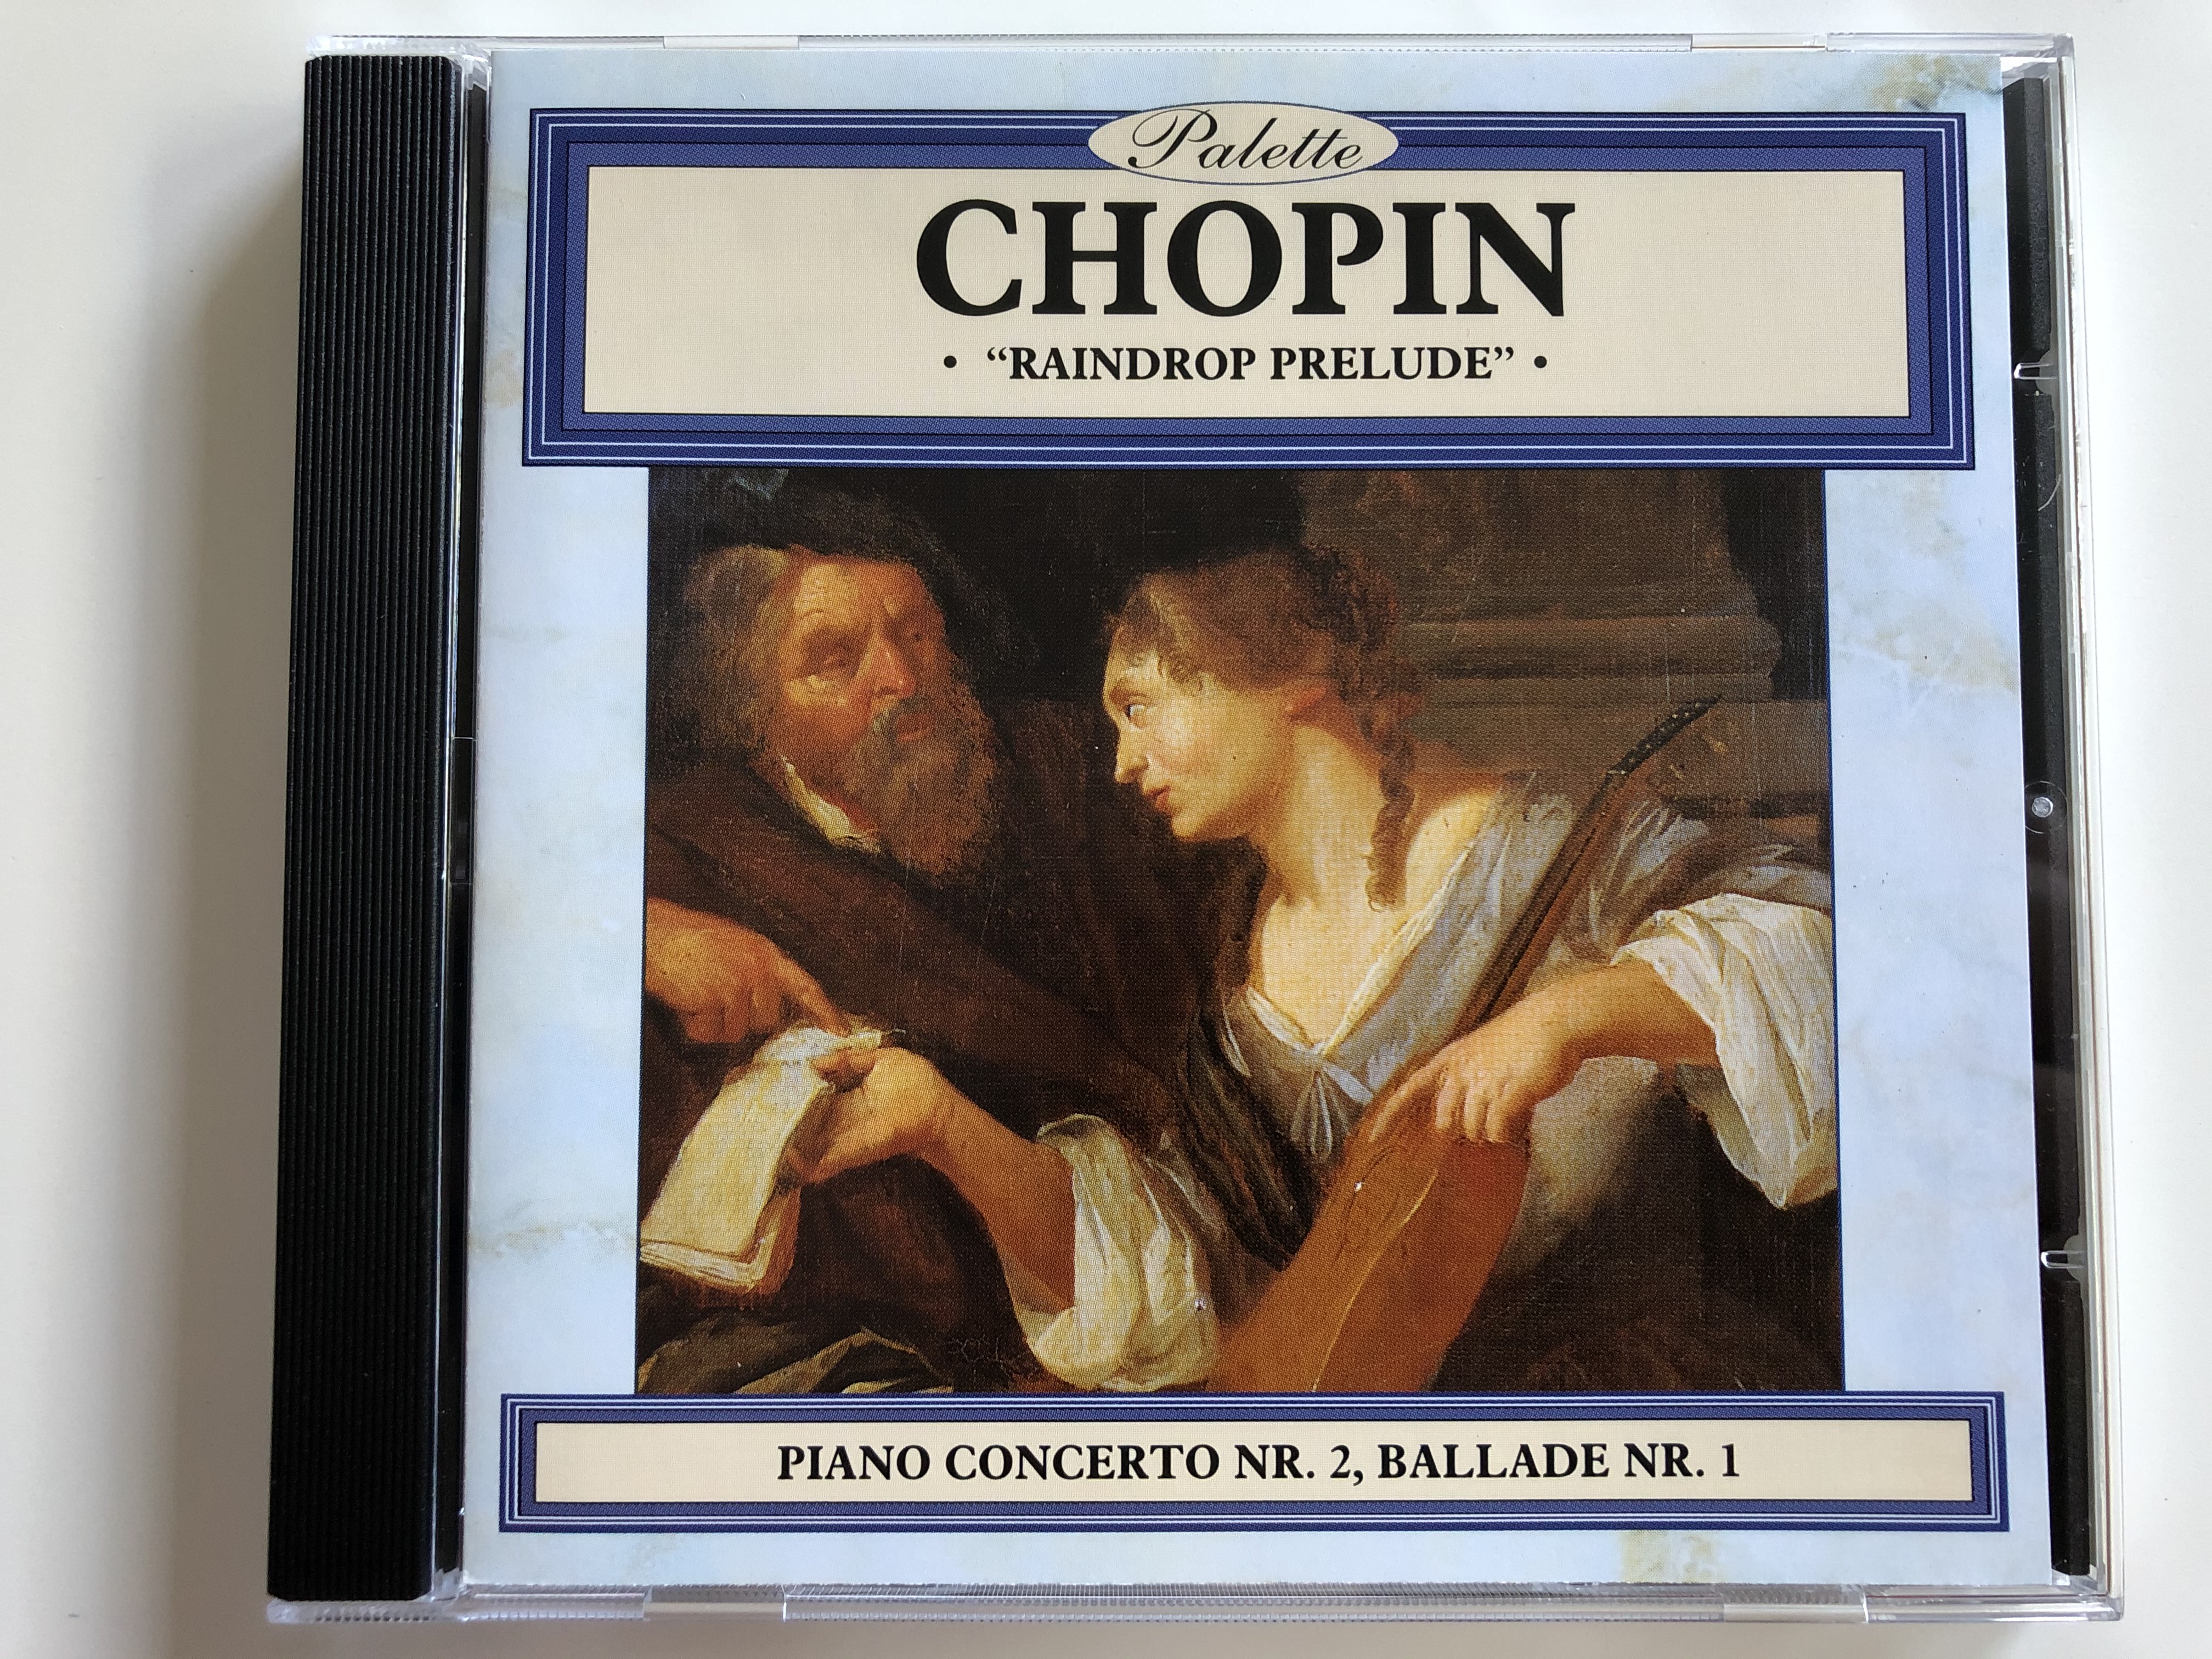 chopin-raindrop-prelude-piano-concerto-nr.-2-ballade-nr.-1-palette-audio-cd-1996-pal031-1-.jpg